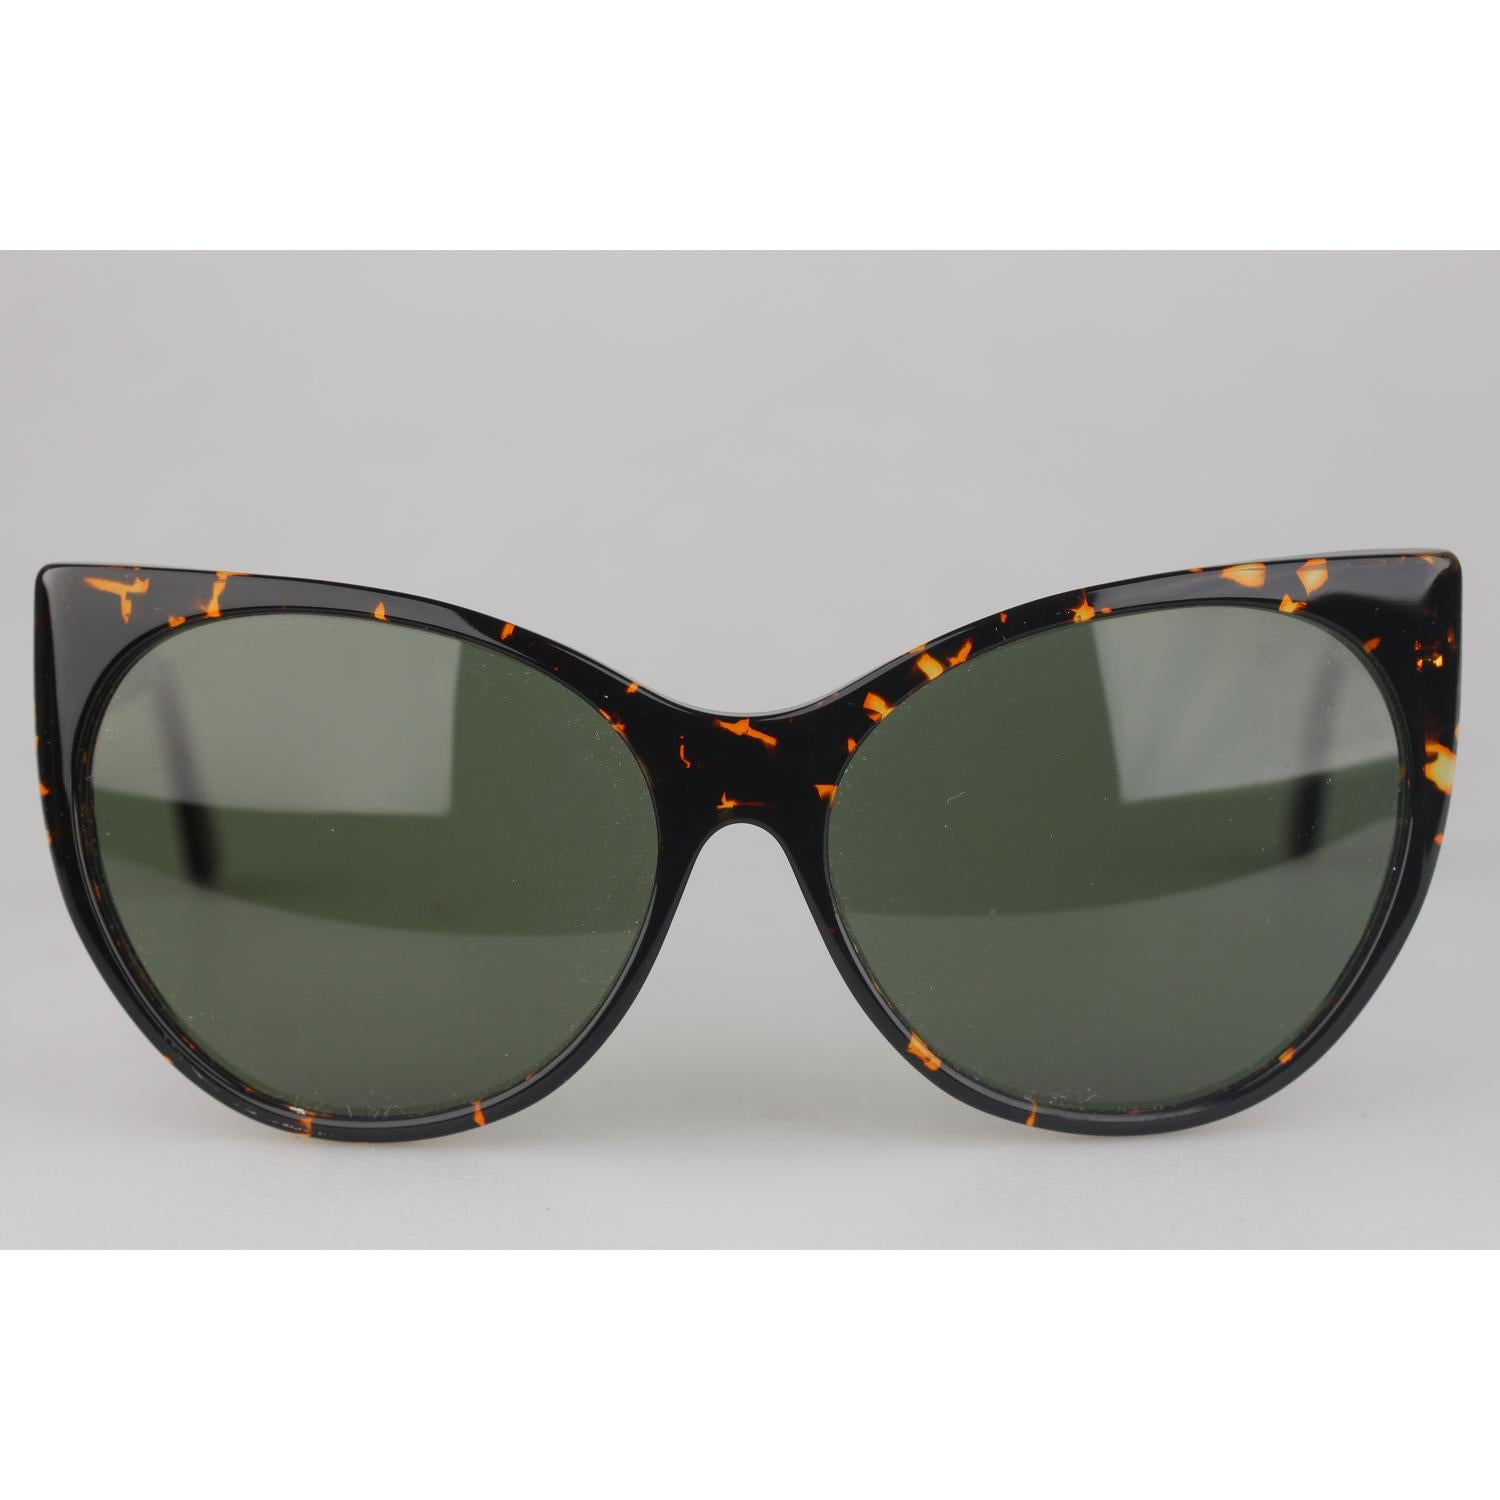 L.G.R. Matt Brown Sunglasses Mod Carthago Polarized Lens New Old Stock 4